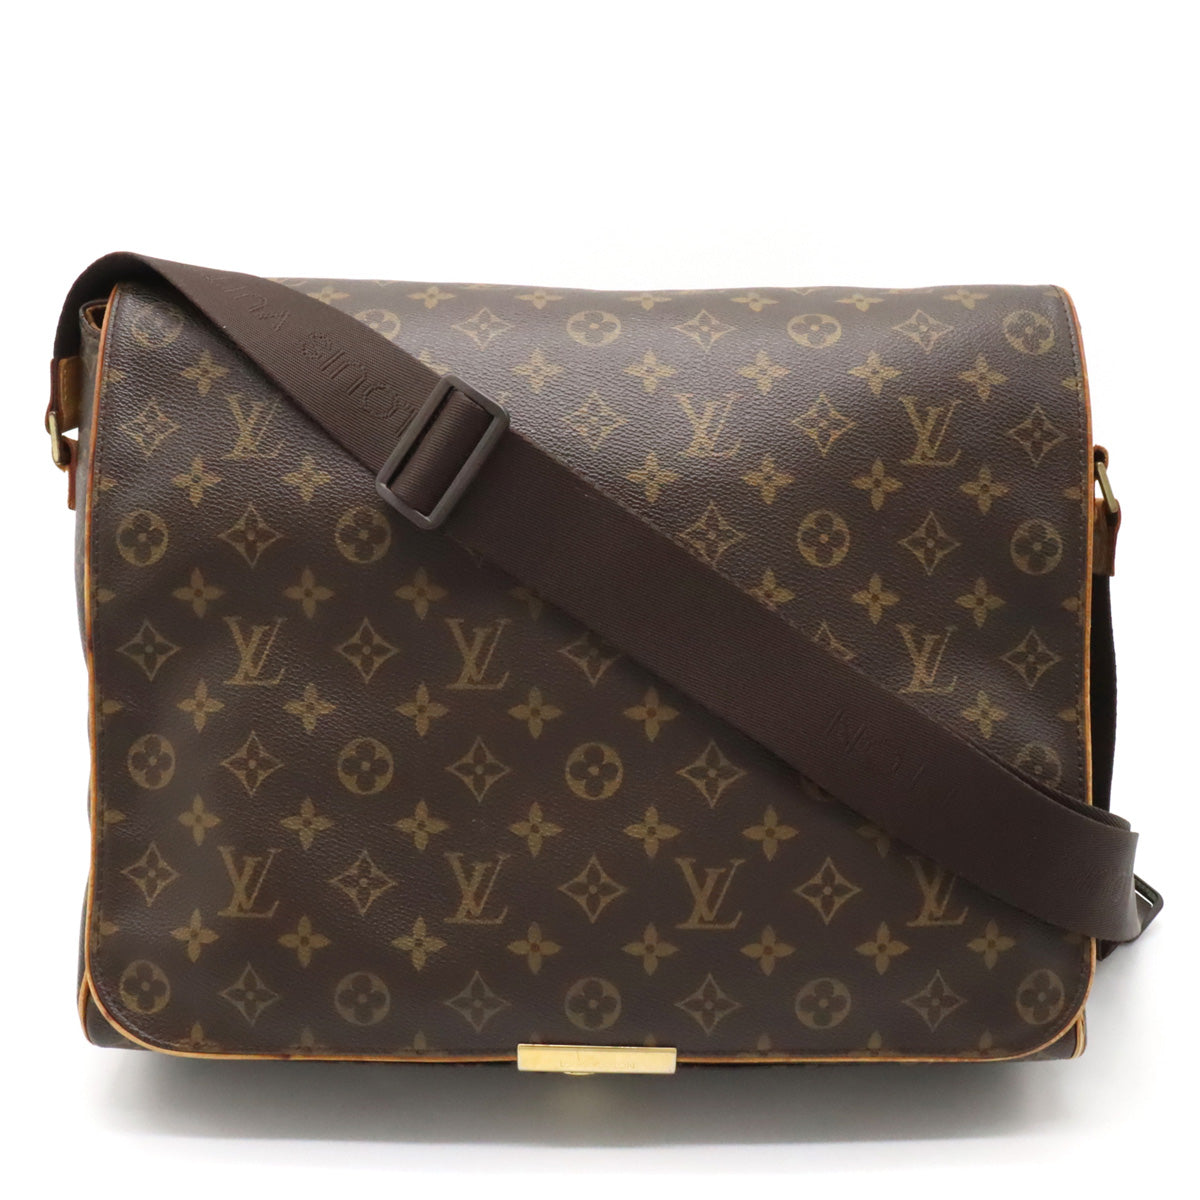 Louis Vuitton, Bags, Extra Large Louis Vuitton Sac Shopping Tote